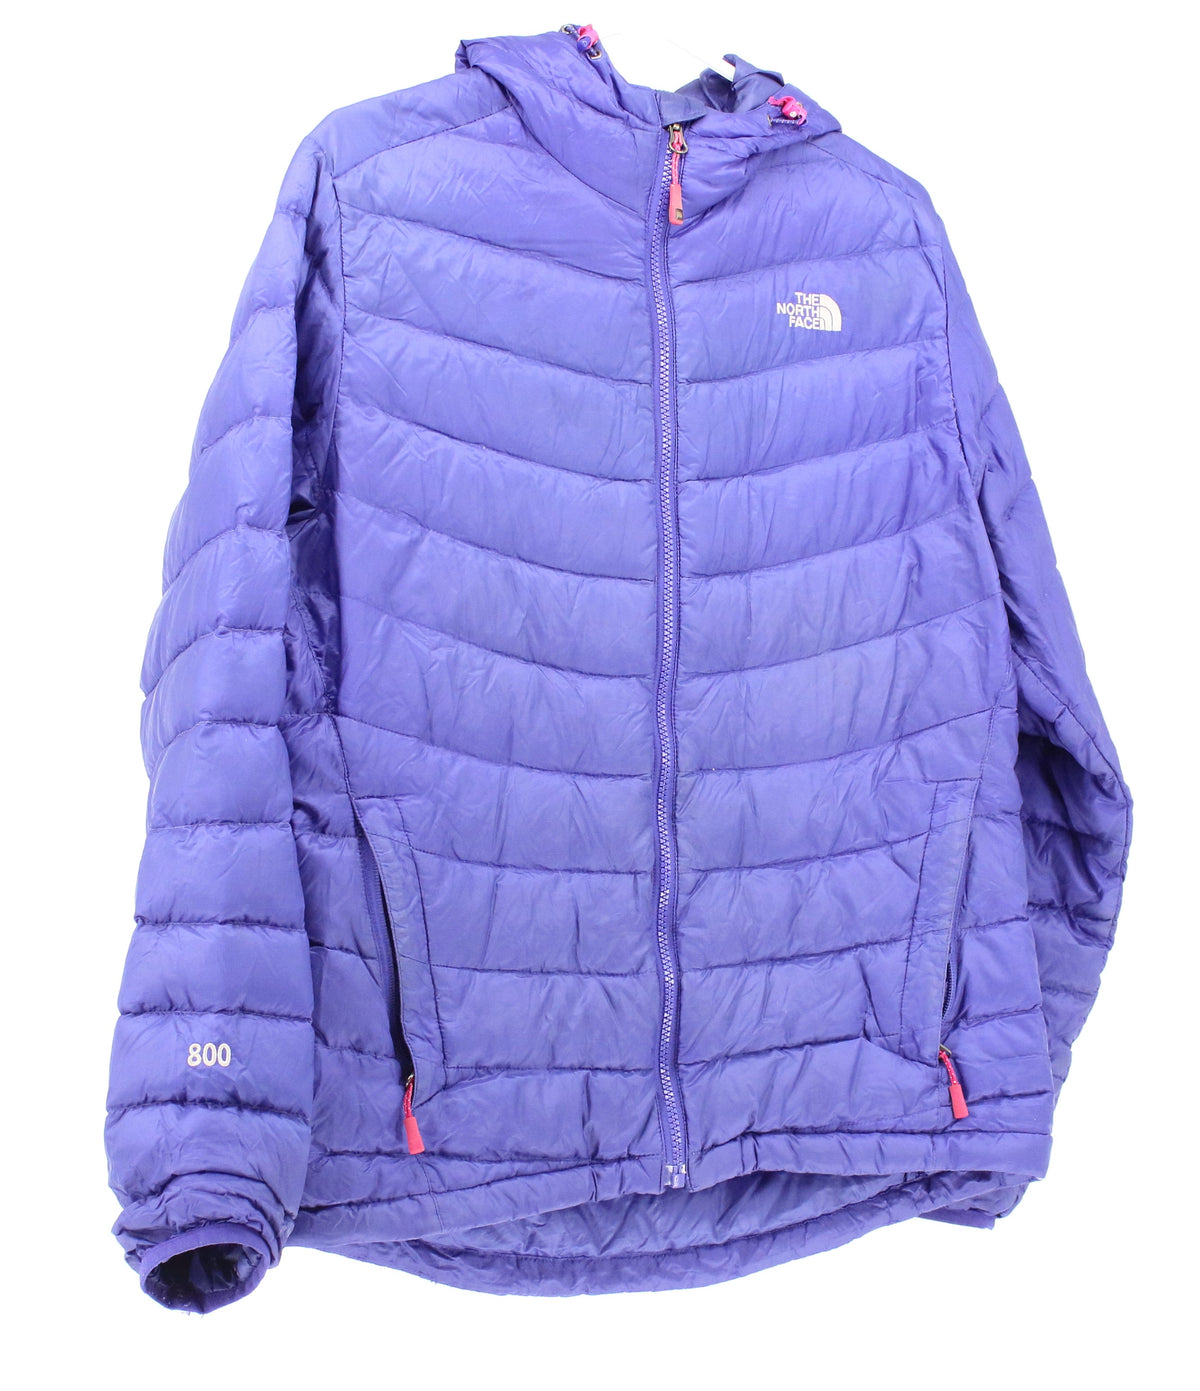 The North Face Summit Series 800 Purple Women's Puffer Jacket